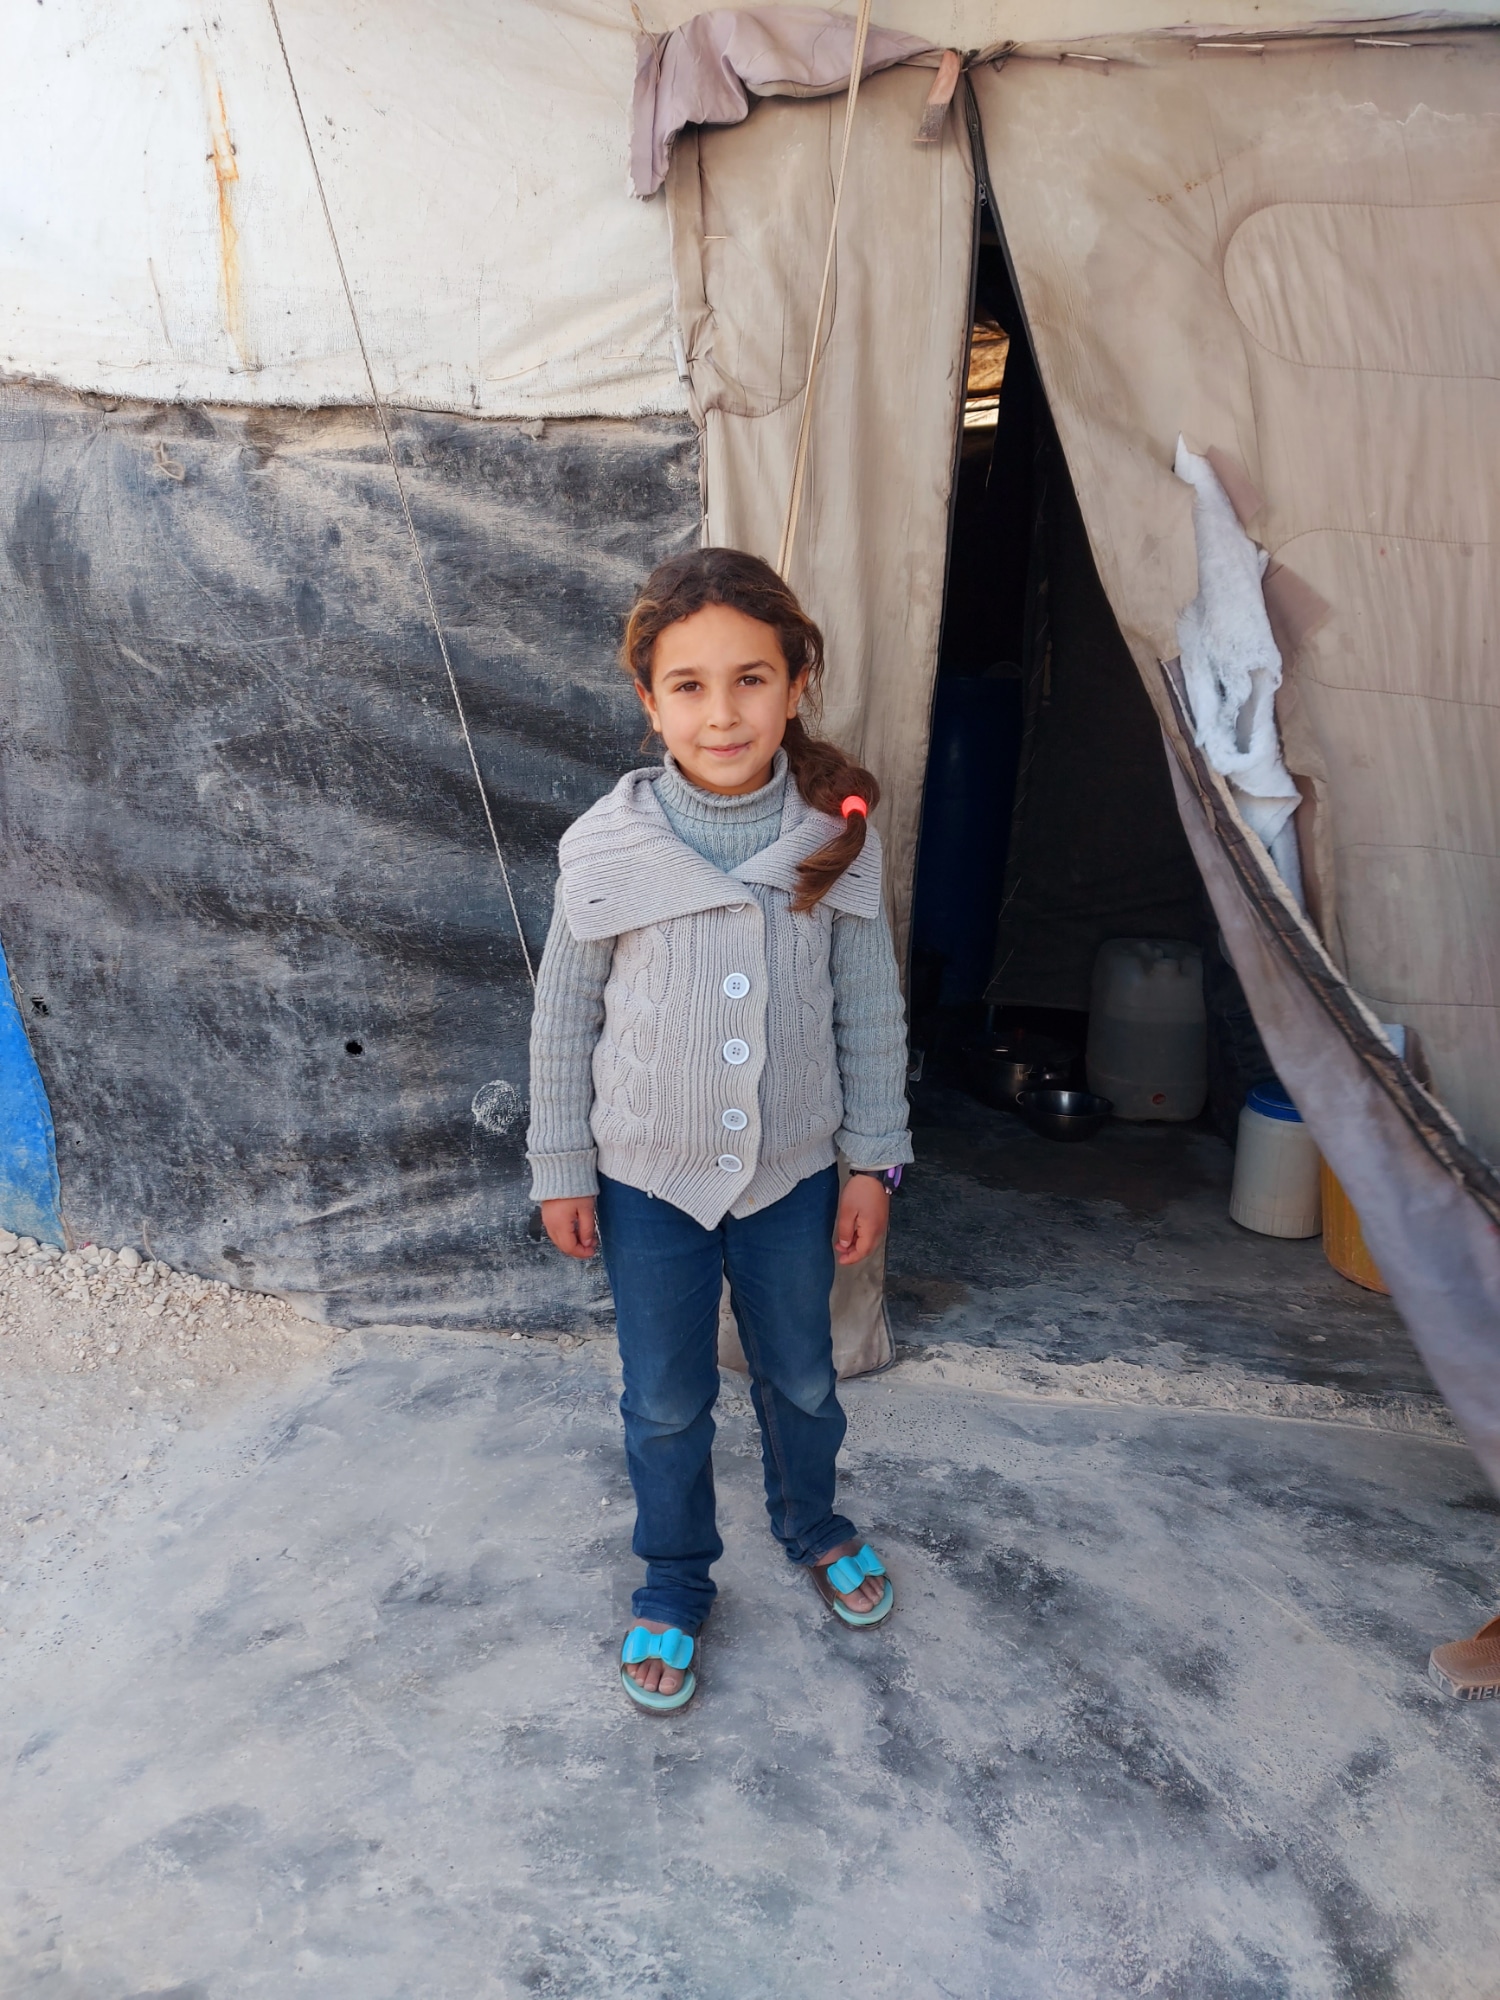 Addressing Child Separation in Syria